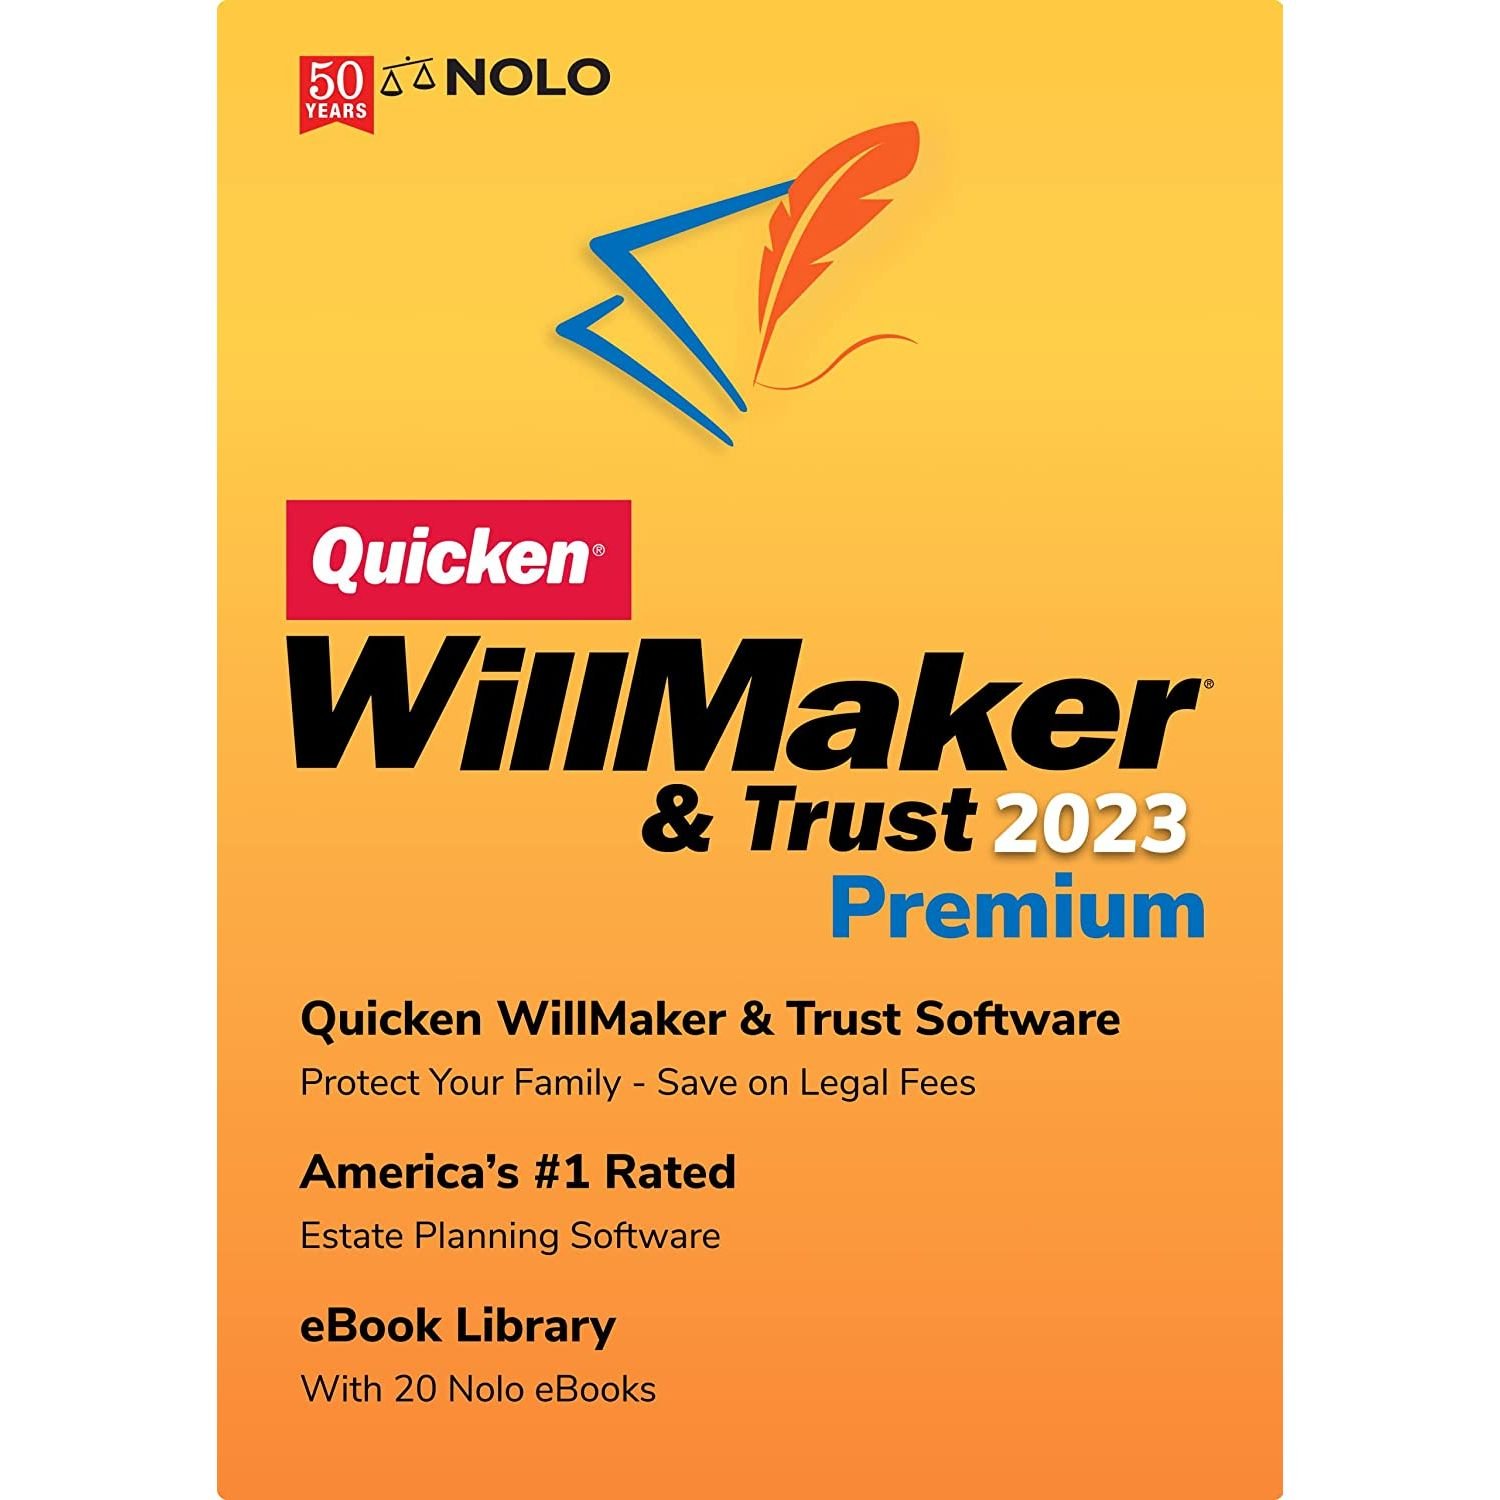 Nolo Quicken WillMaker & Trust 2023 Premium Download Key with 2021